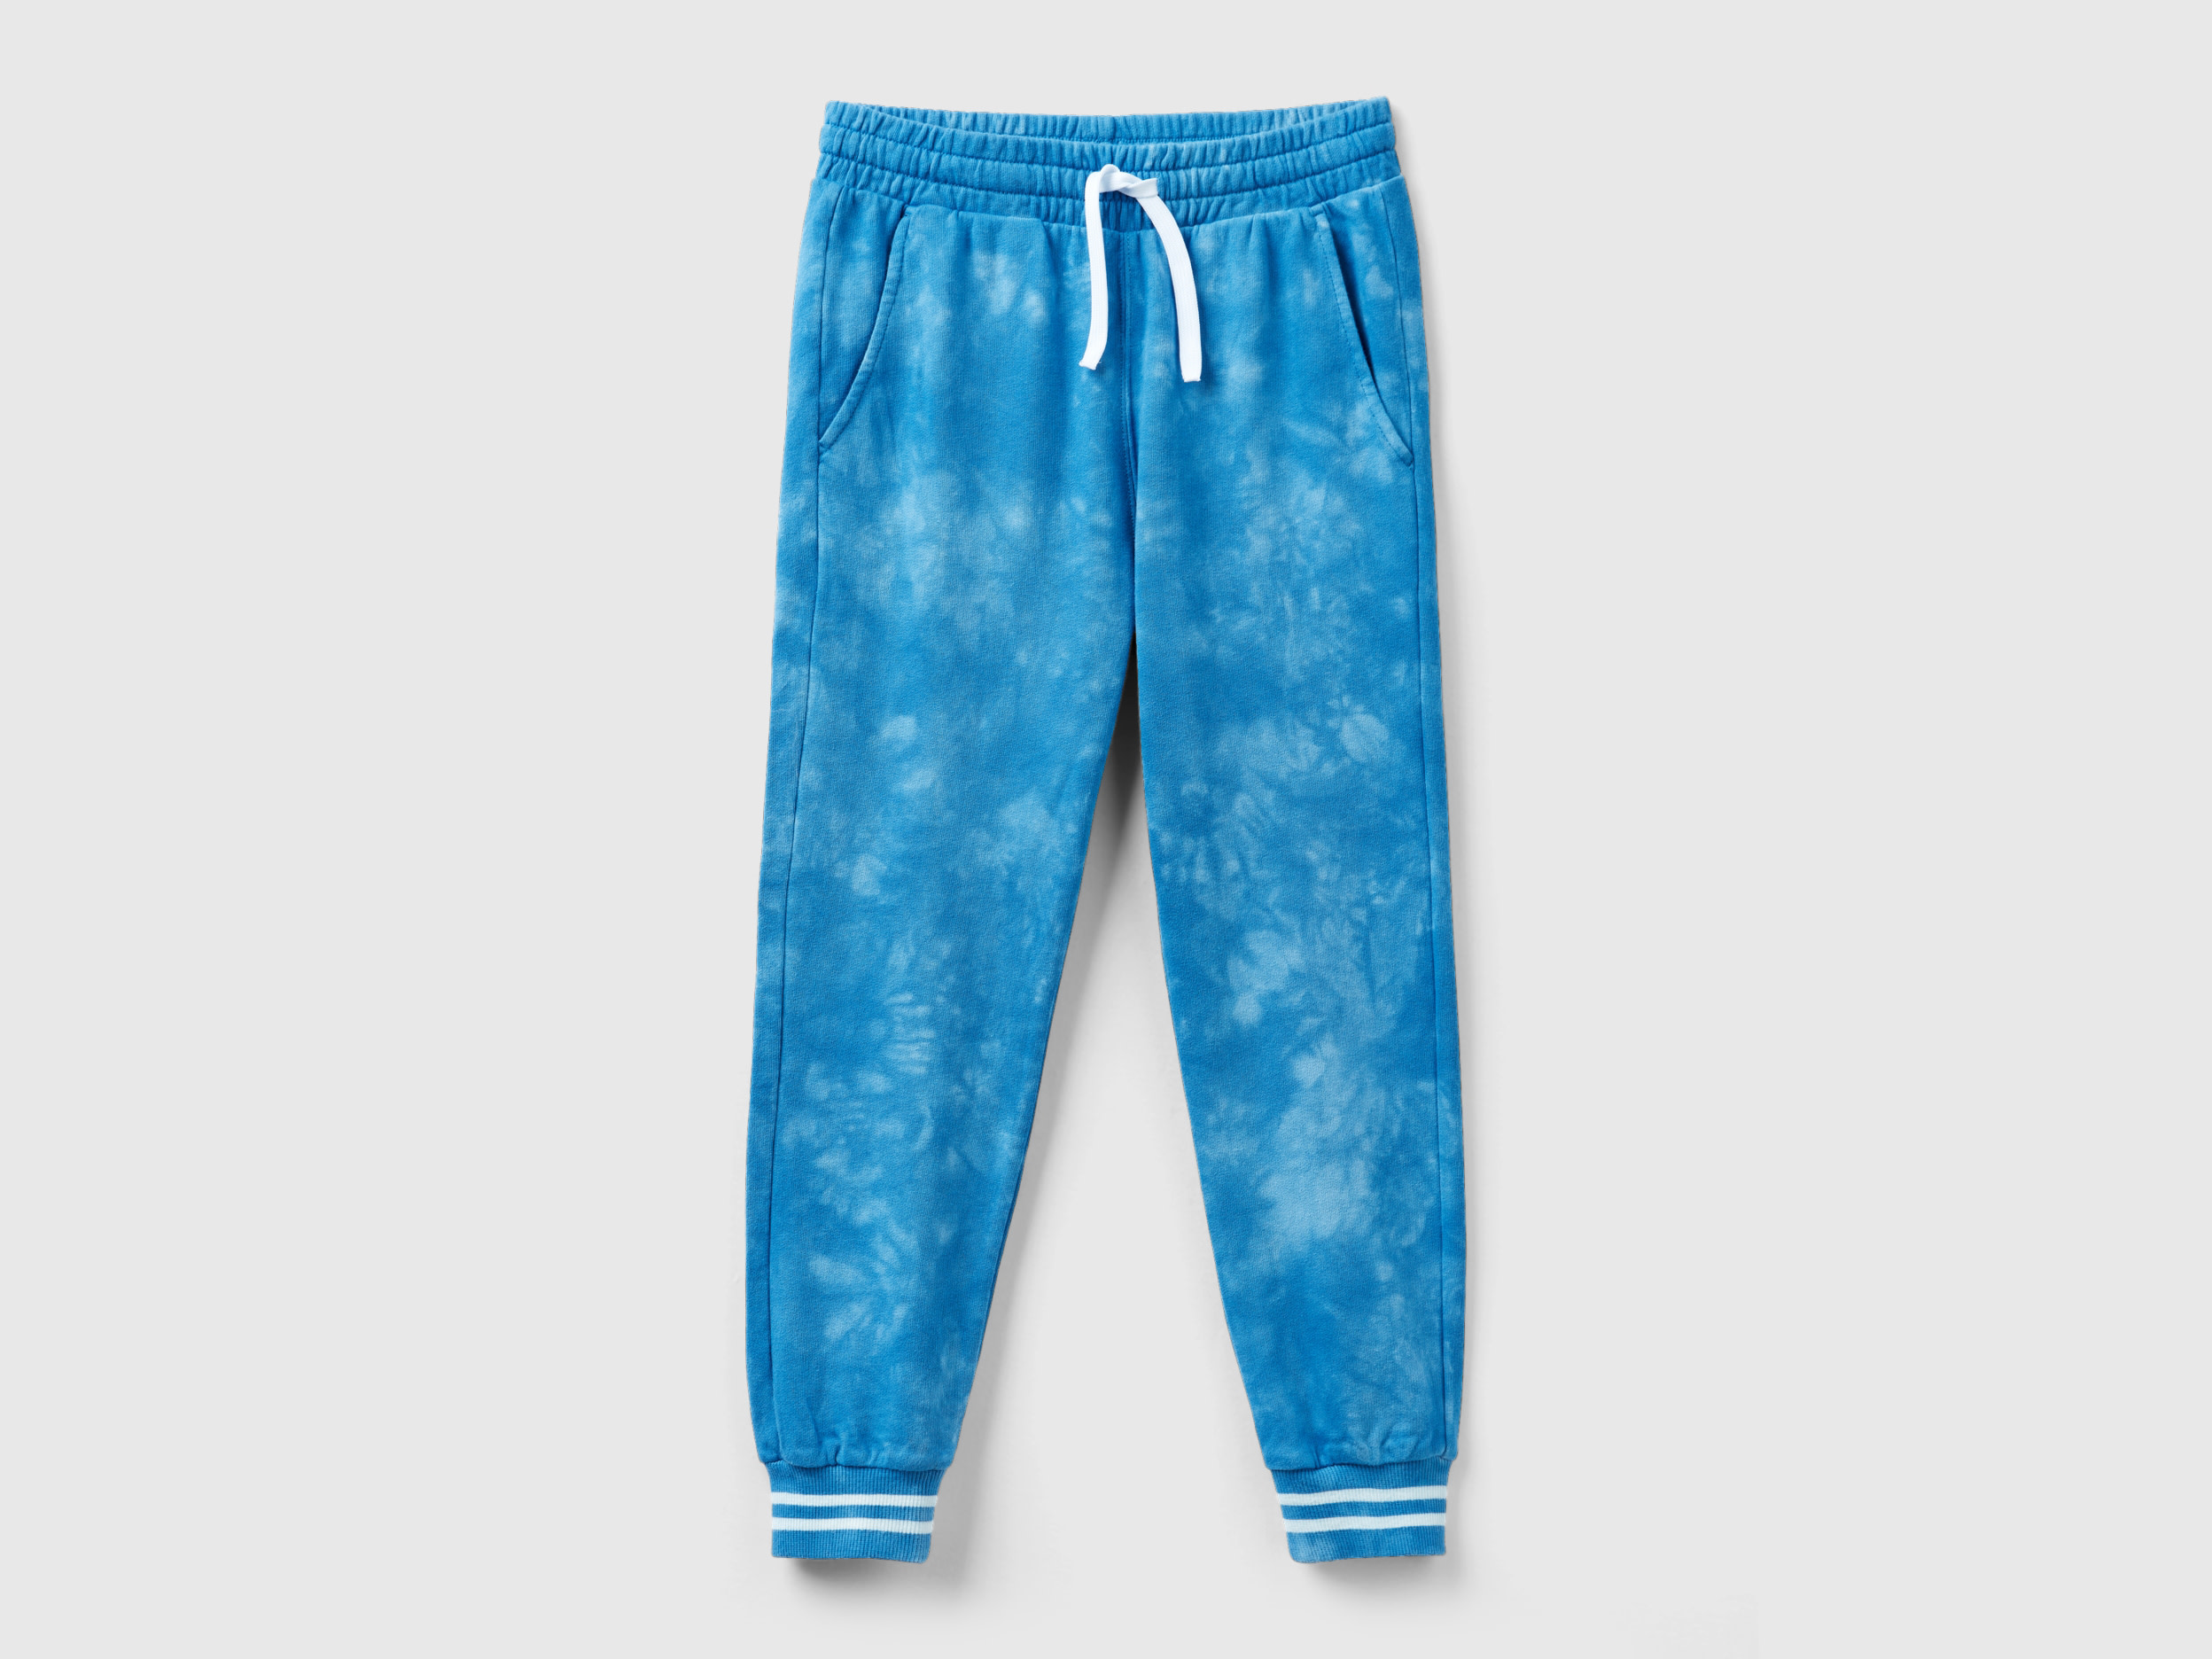 Benetton, Tie-dye Sweatpants, size 3XL, Light Blue, Kids